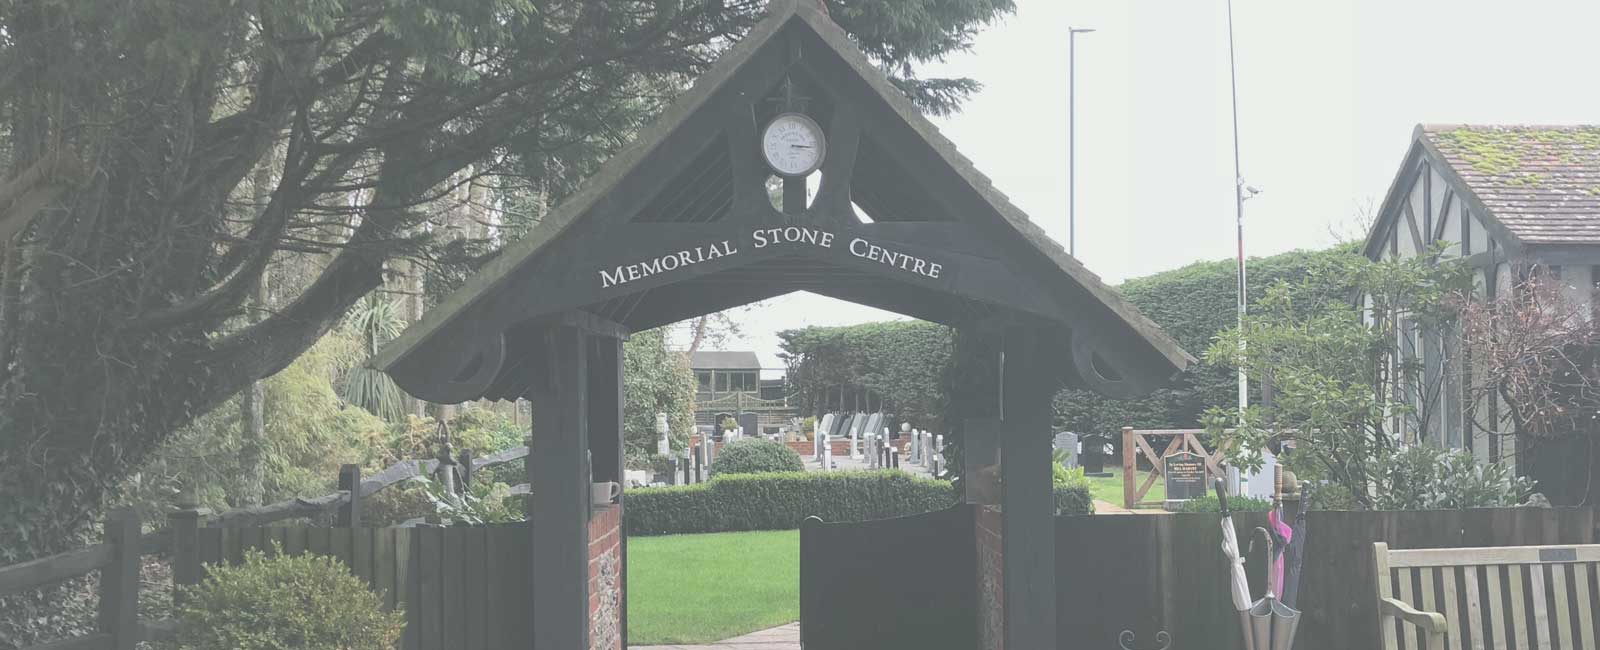 memorial stone centre